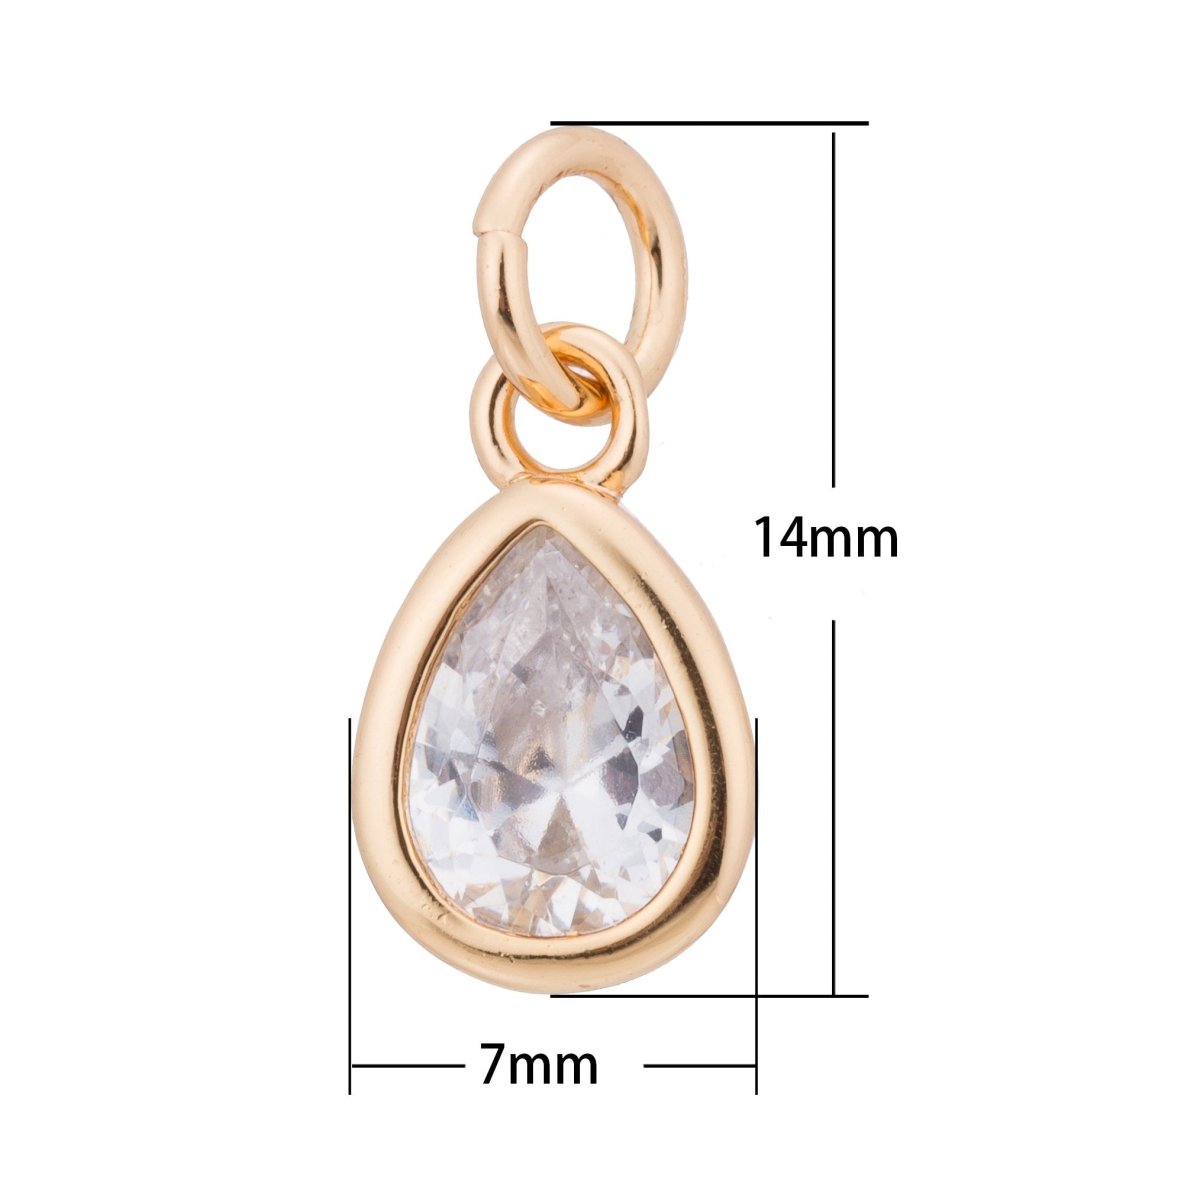 Gold / Silver / Rose Gold Pear Shaped, Tear Drop, Dangle Charm Modern Women DIY Craft Cubic Zirconia Bracelet Charm Bead Findings Pendant For Jewelry Making C-180 - DLUXCA